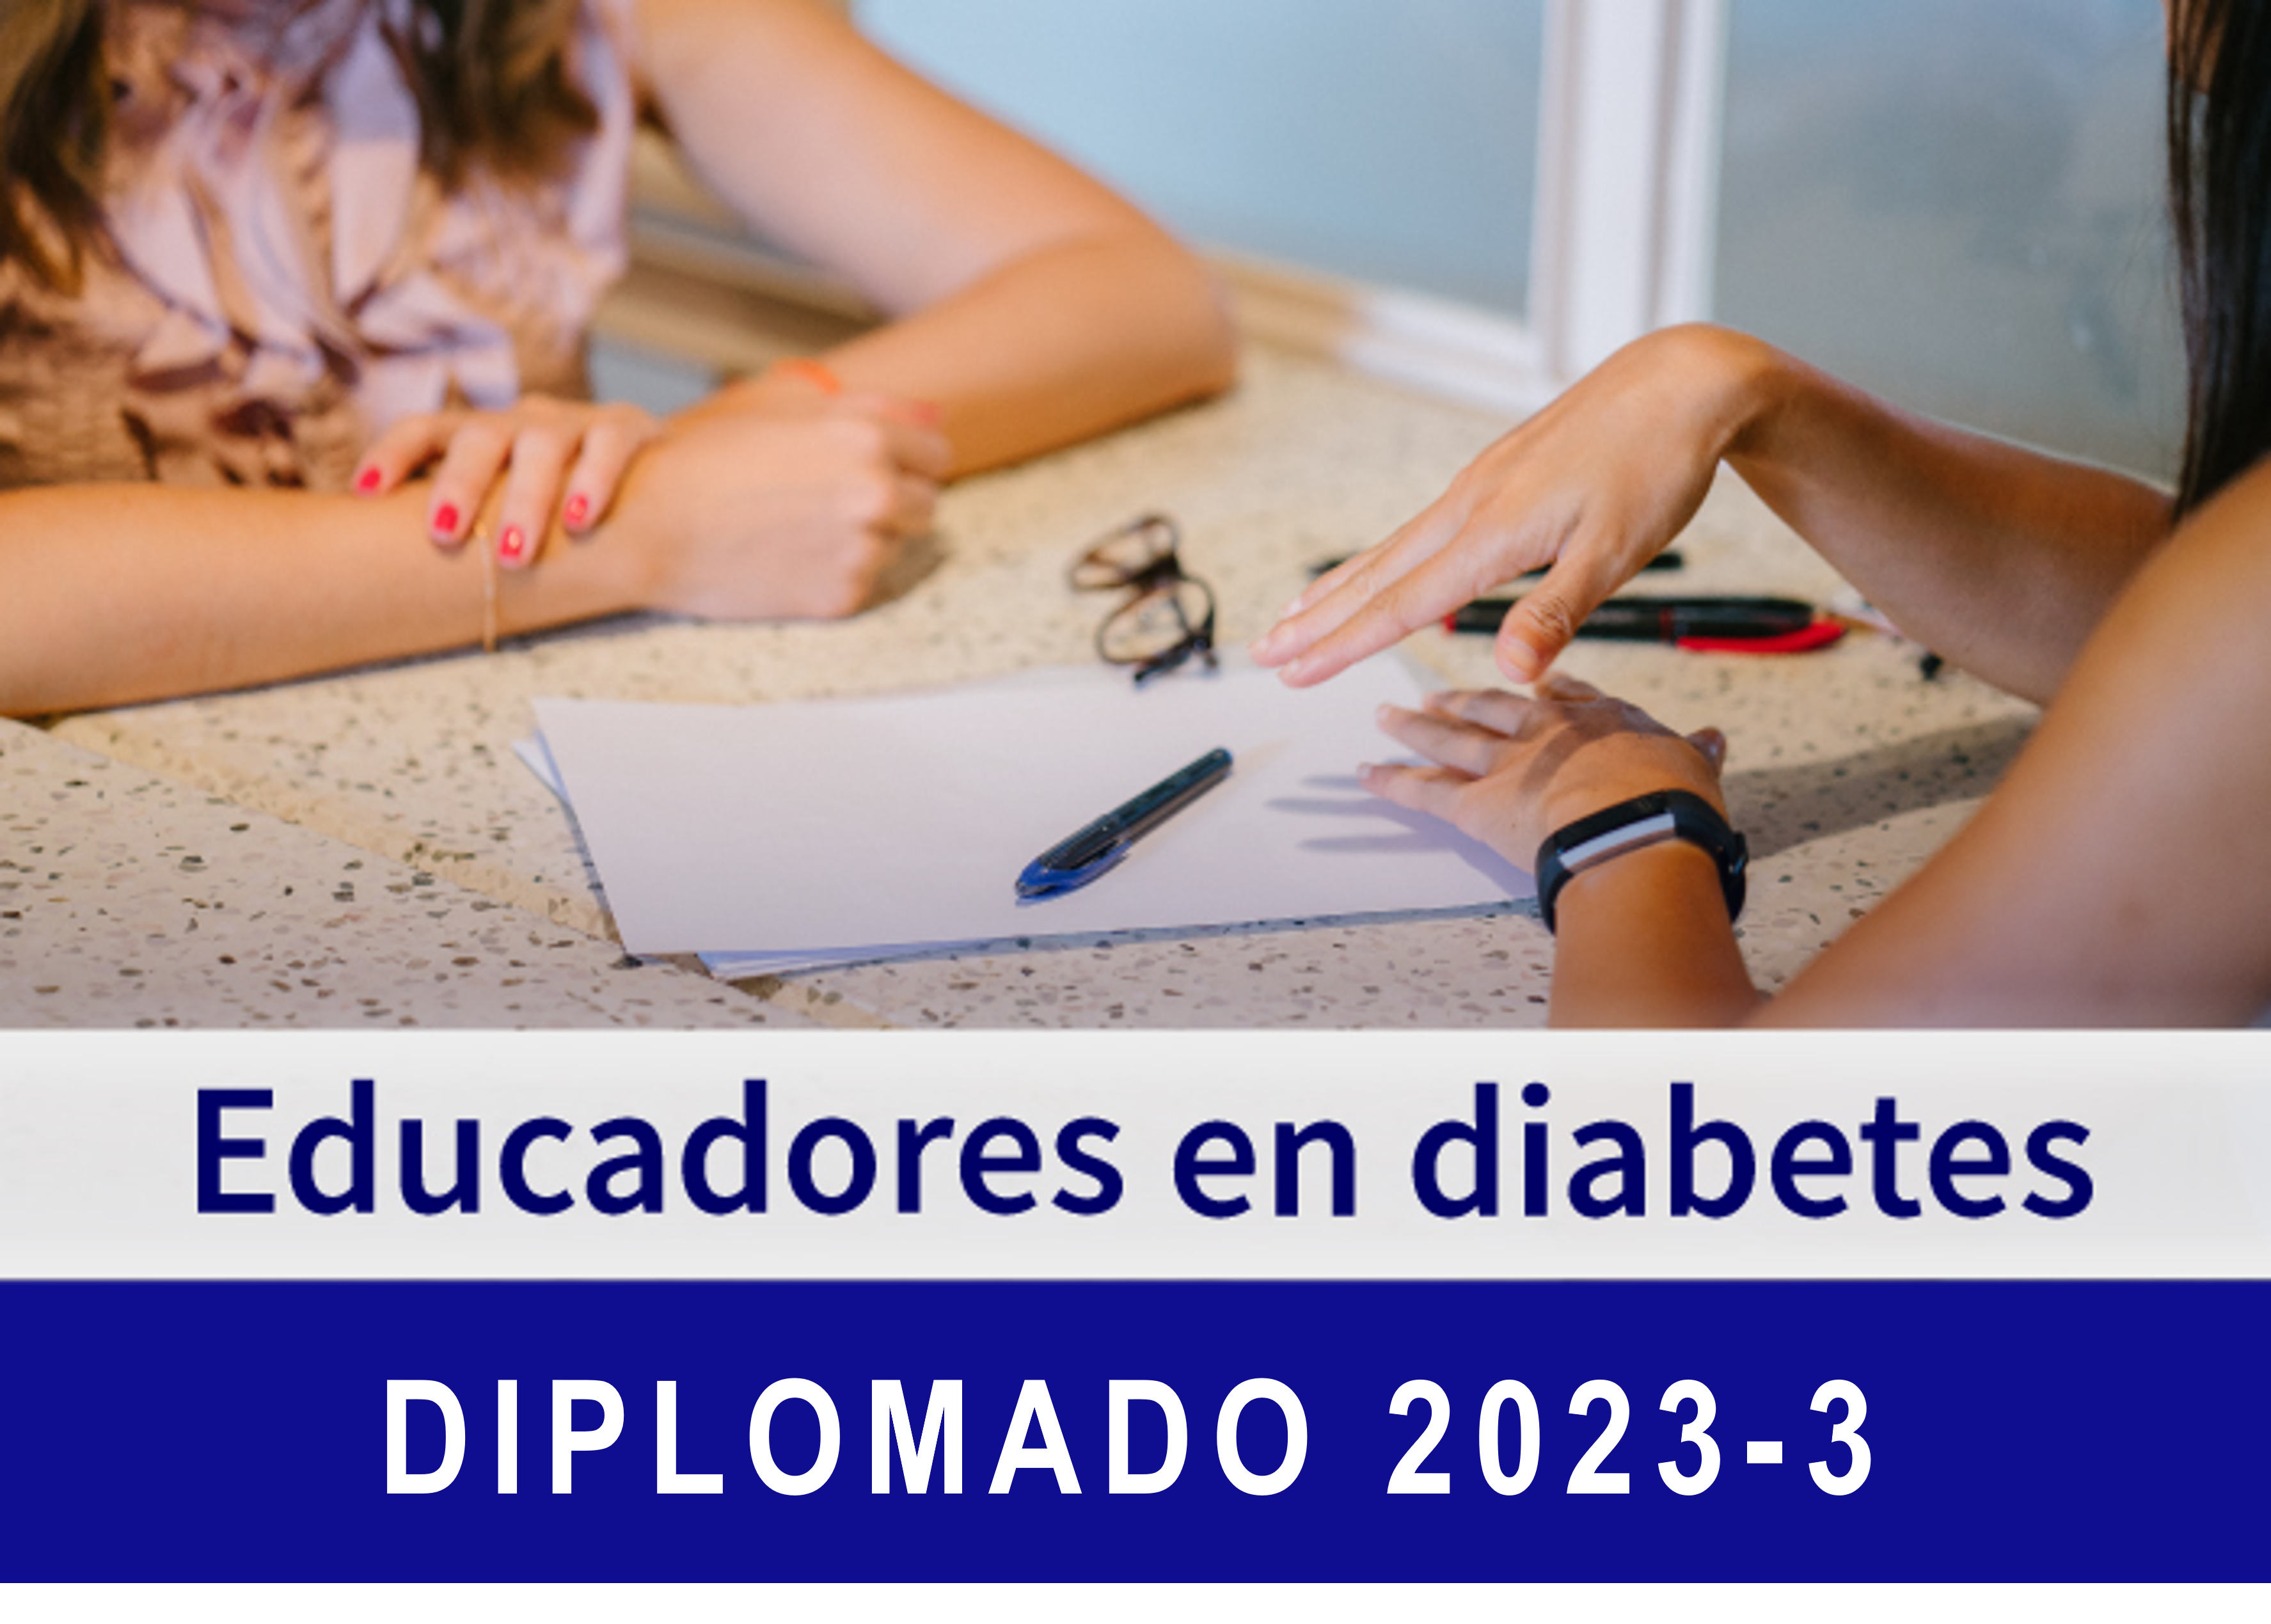 Diplomado de Educadores en Diabetes 2023-3 